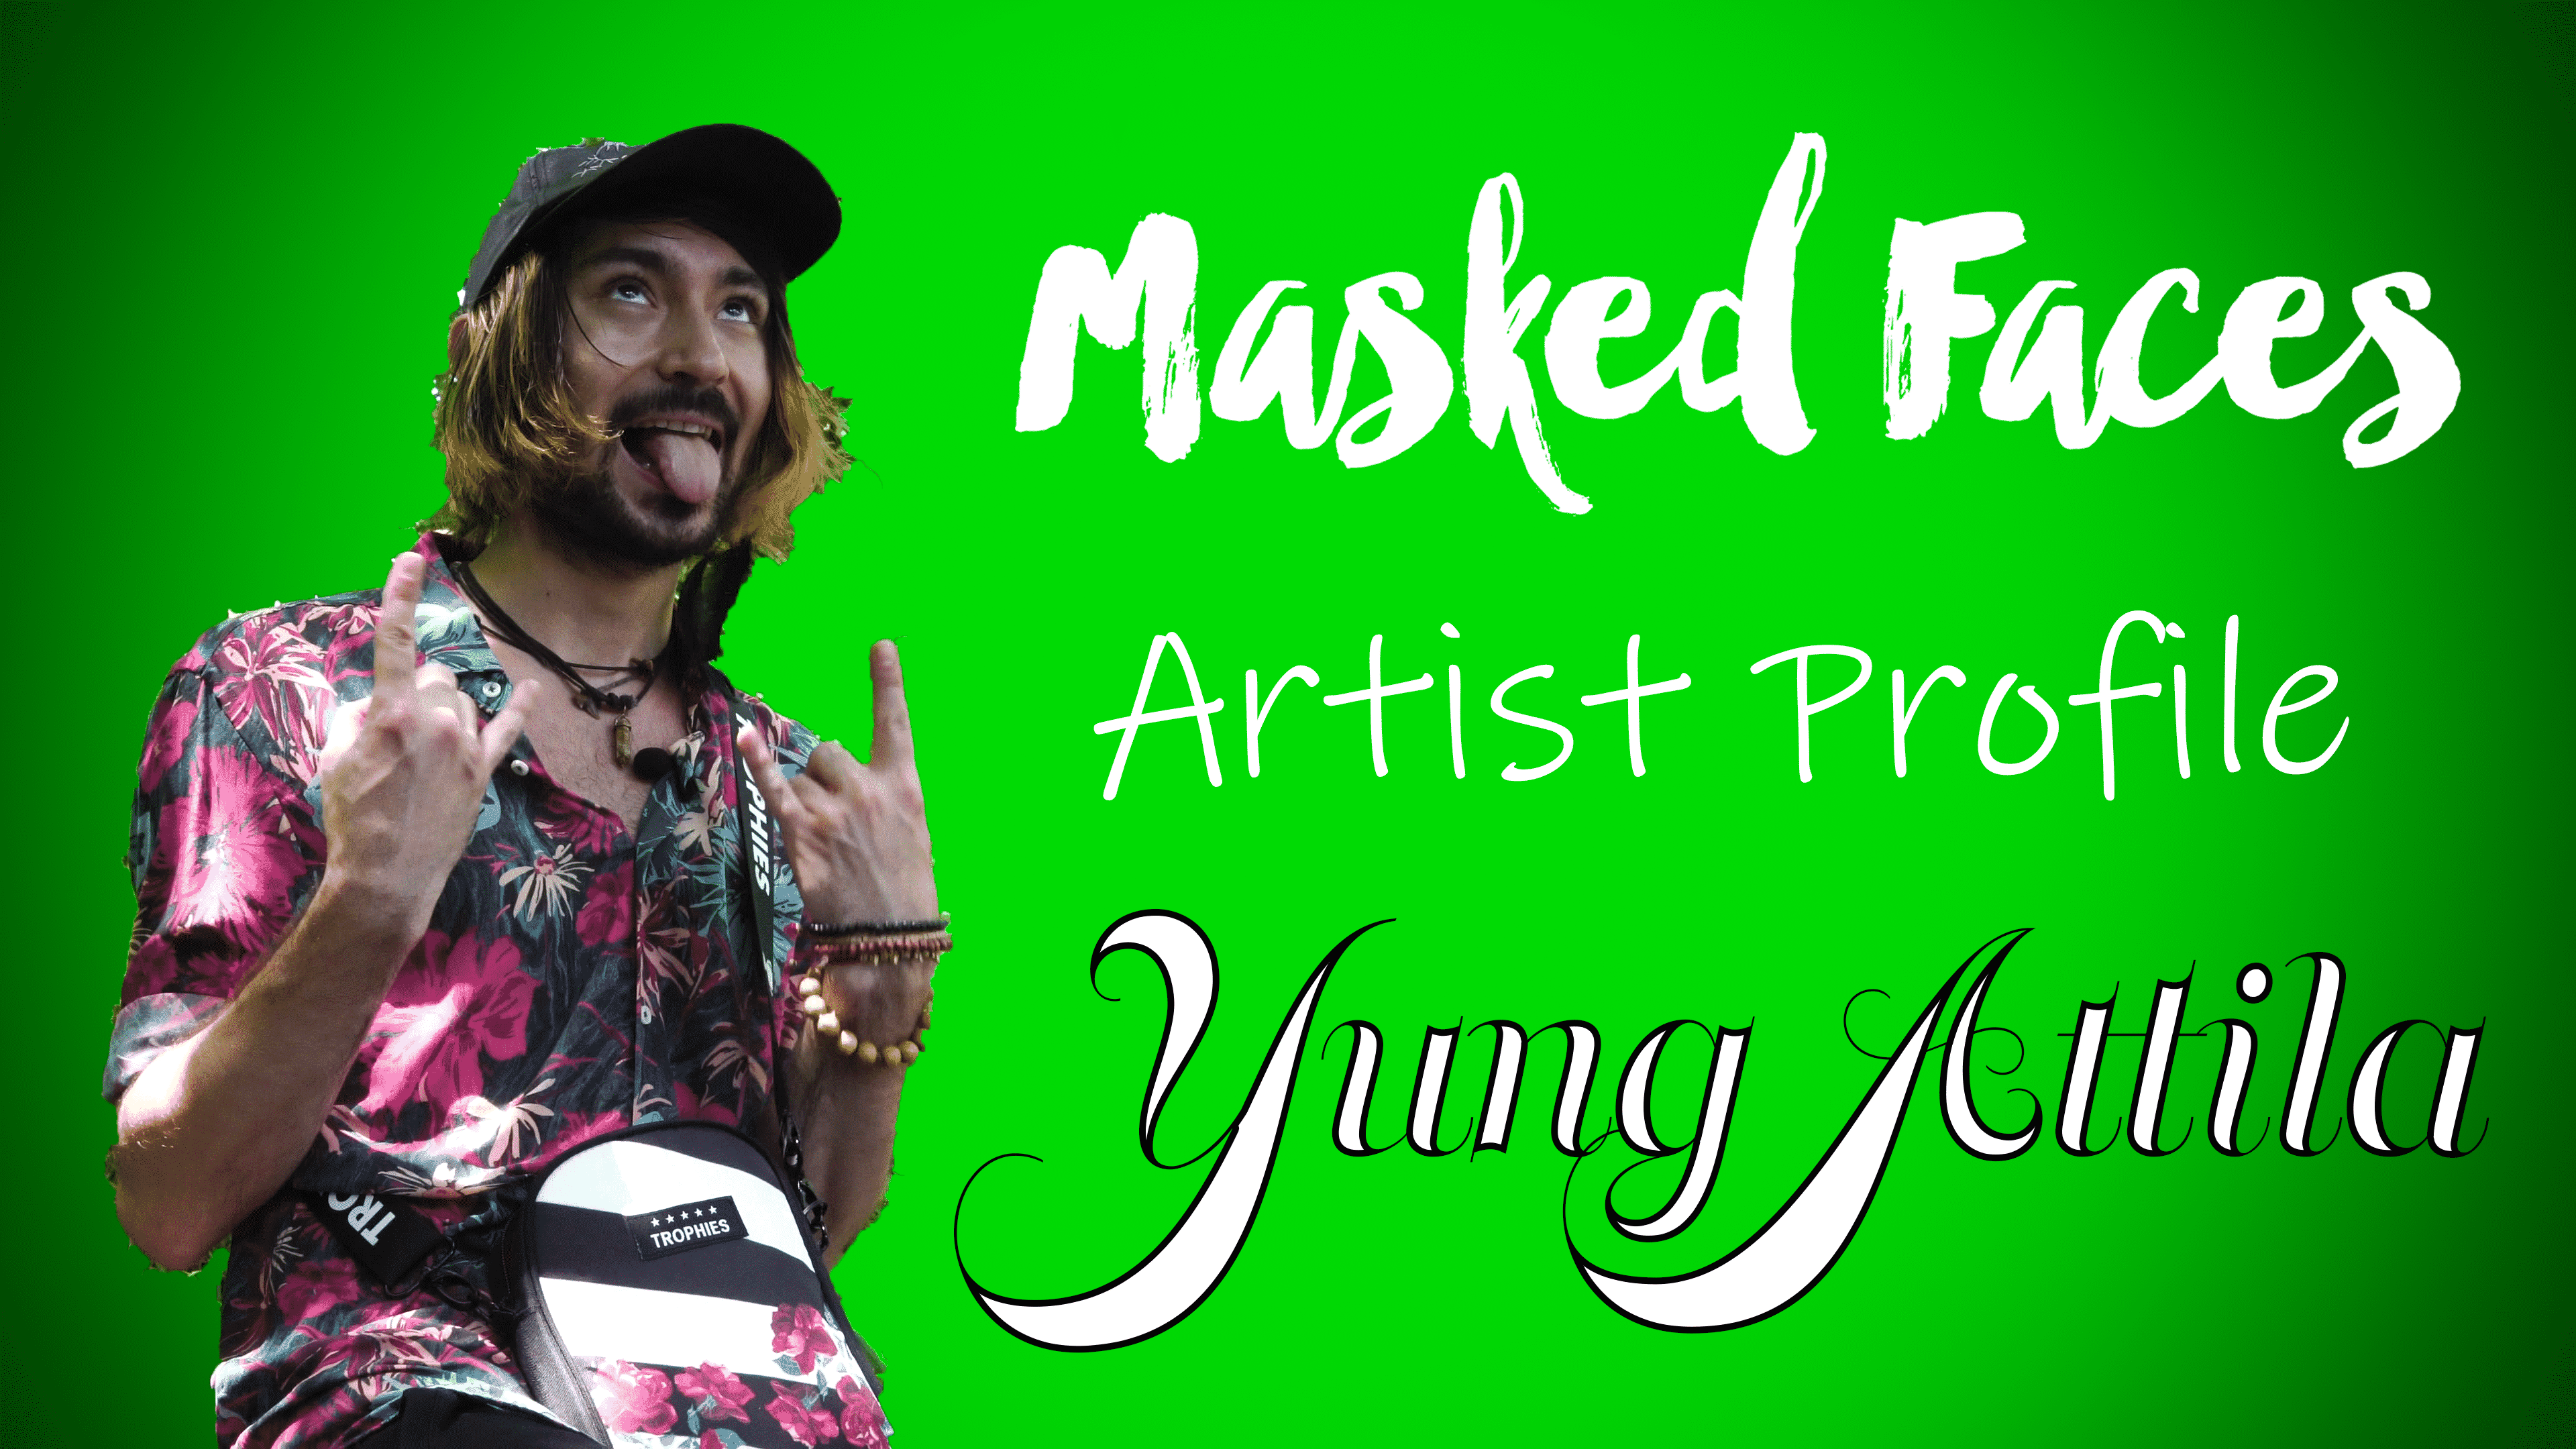 yung-attila-artist-profile-masked-faces